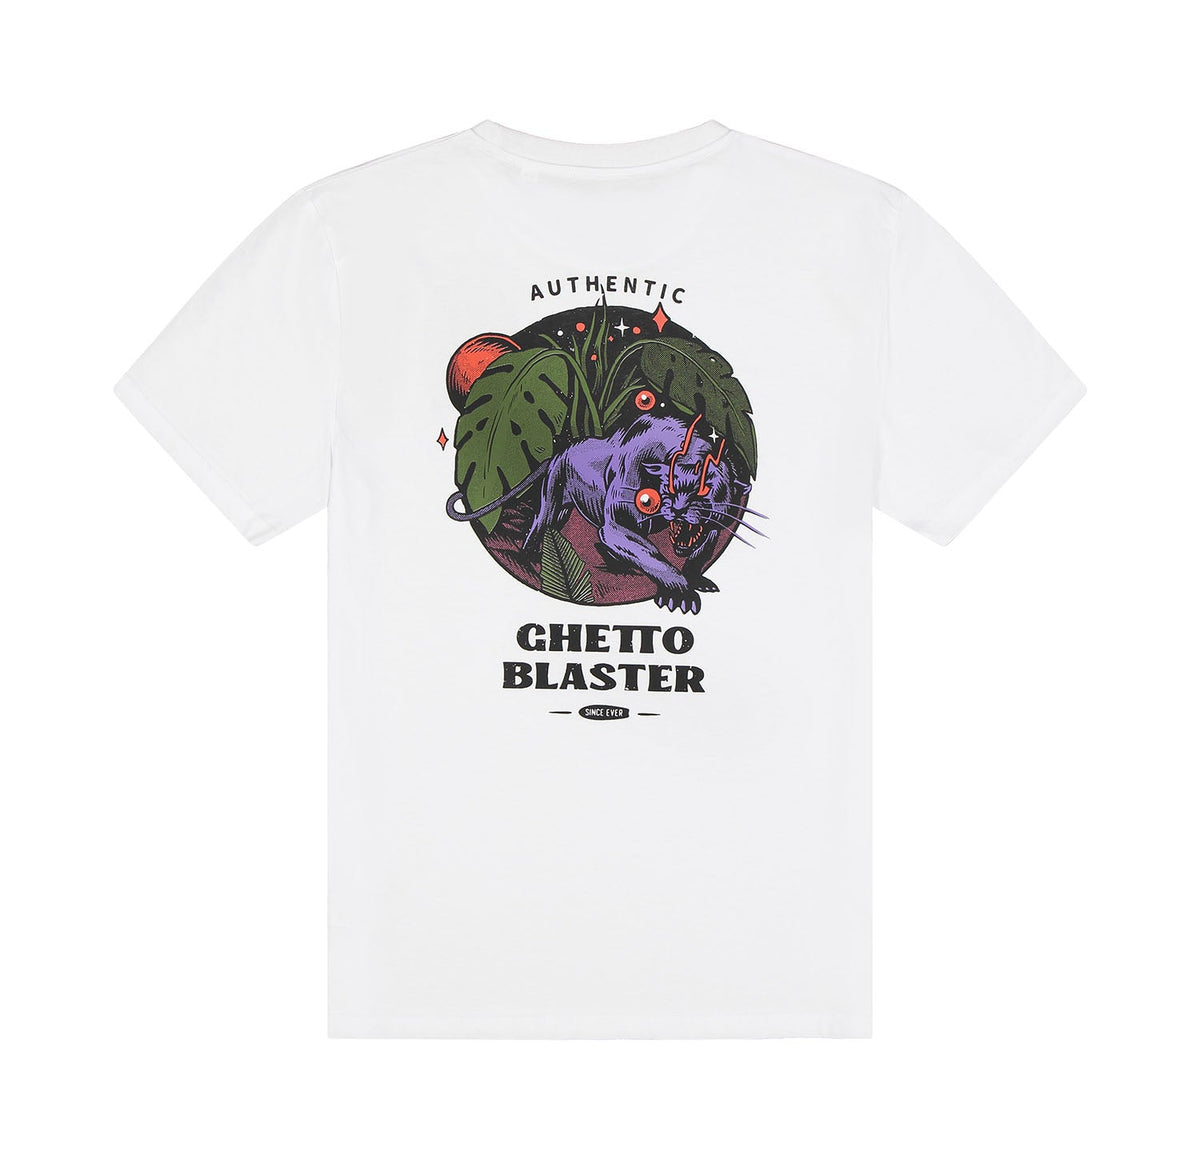 T-Shirt Panther White - ghettoblasterwear